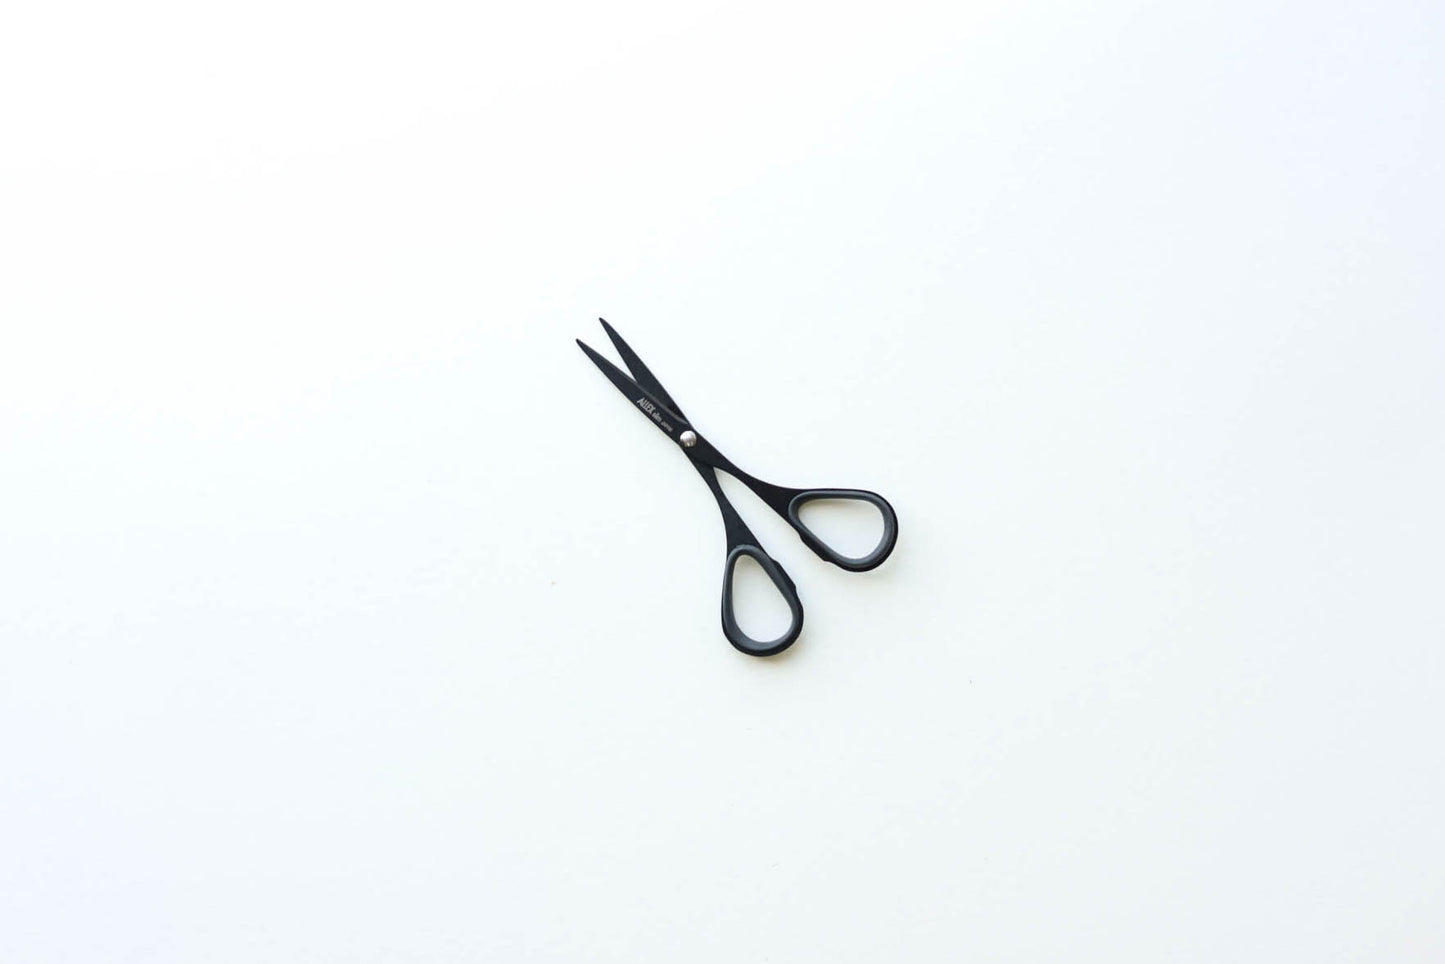 Allex Small Slim Scissors – Case for Making